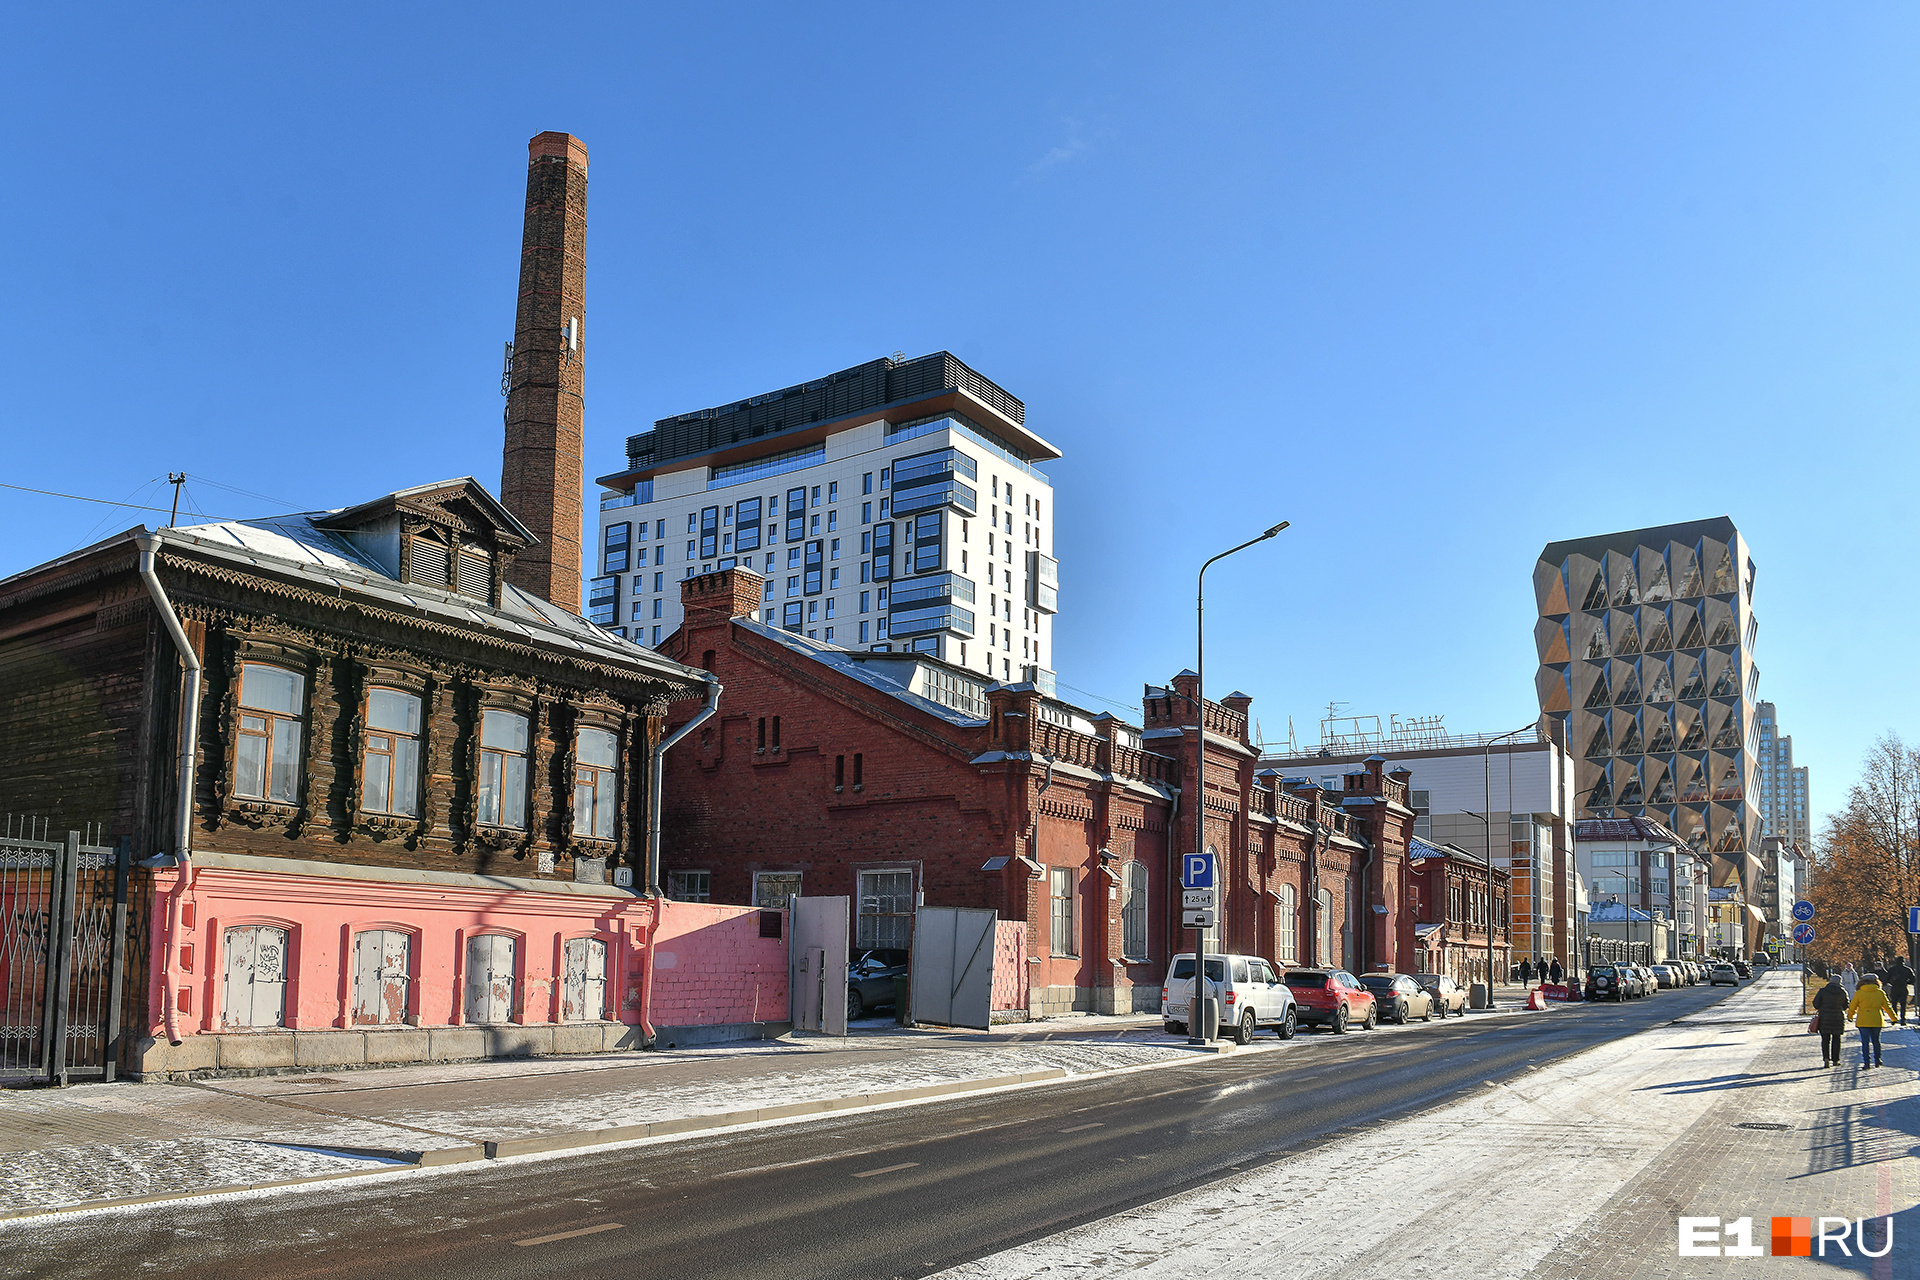 Слева — дом купца Крутикова, за ним — здание электростанции